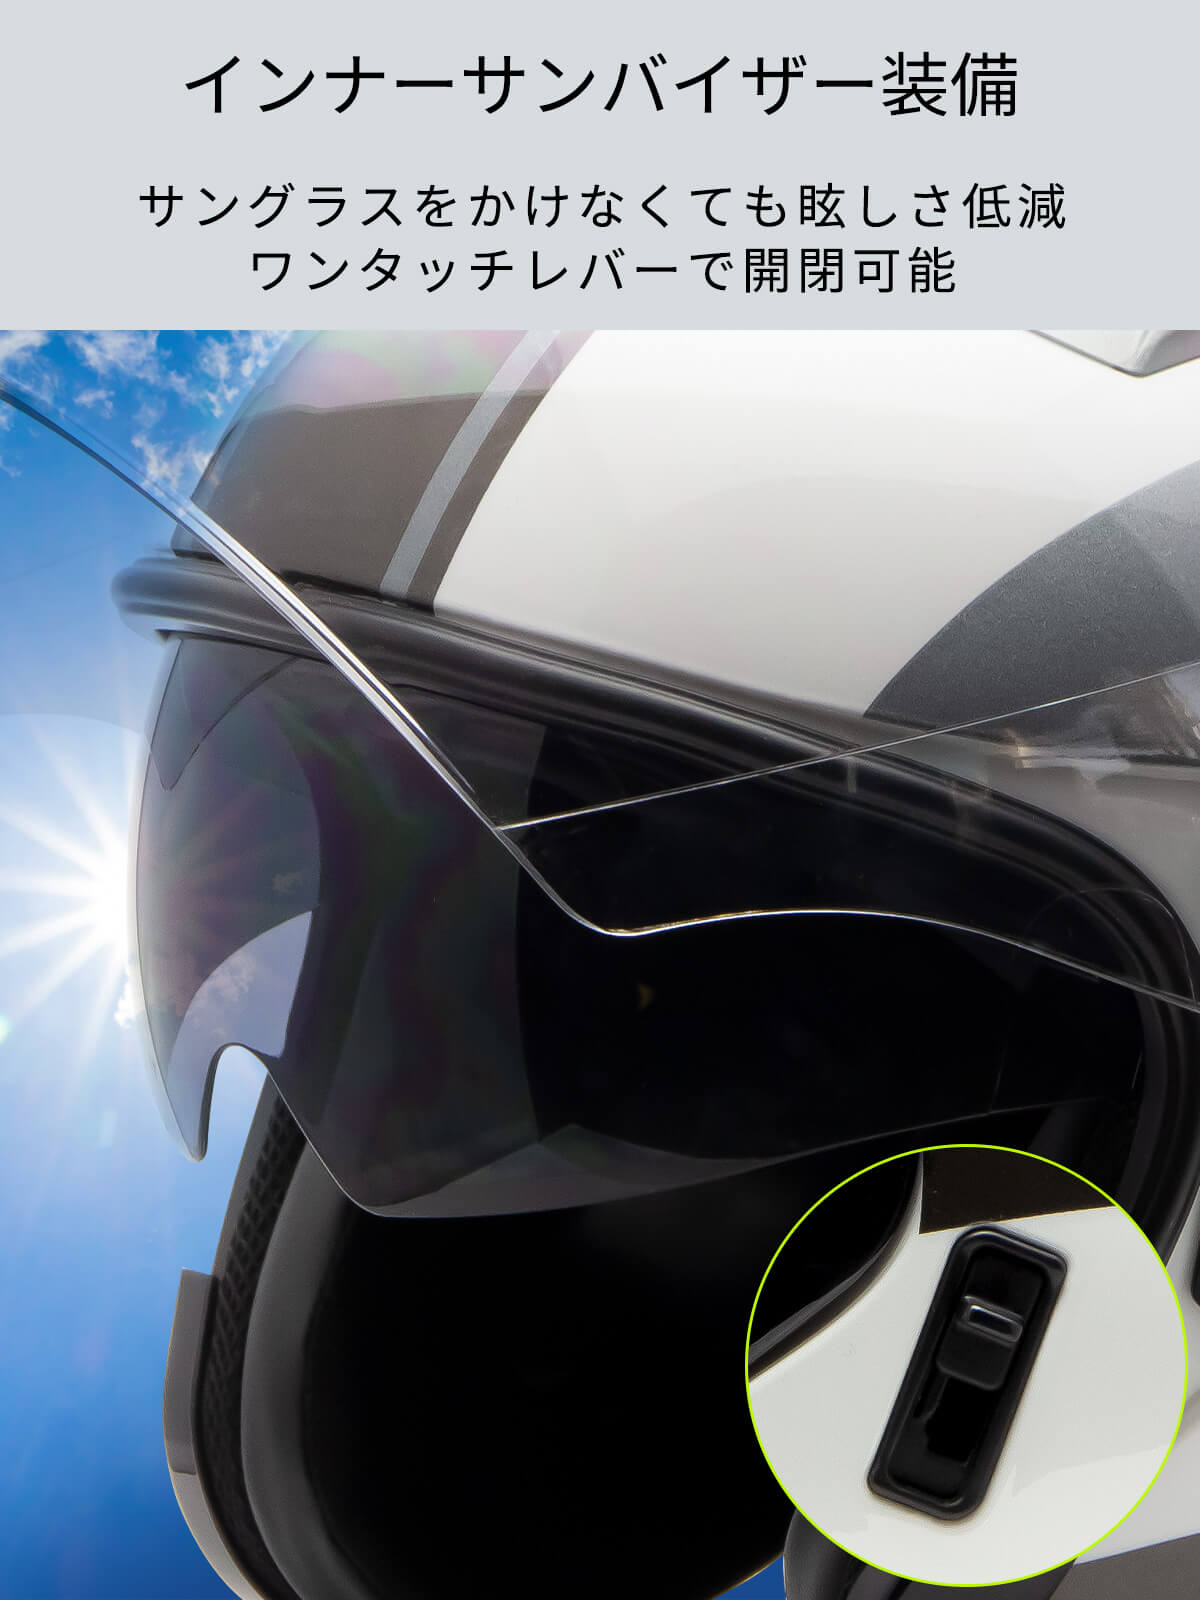  мотоцикл шлем jet внутренний козырек LB-02 Liberta FS-JAPAN камень . association / SG стандарт PSC стандарт / мотоцикл шлем 